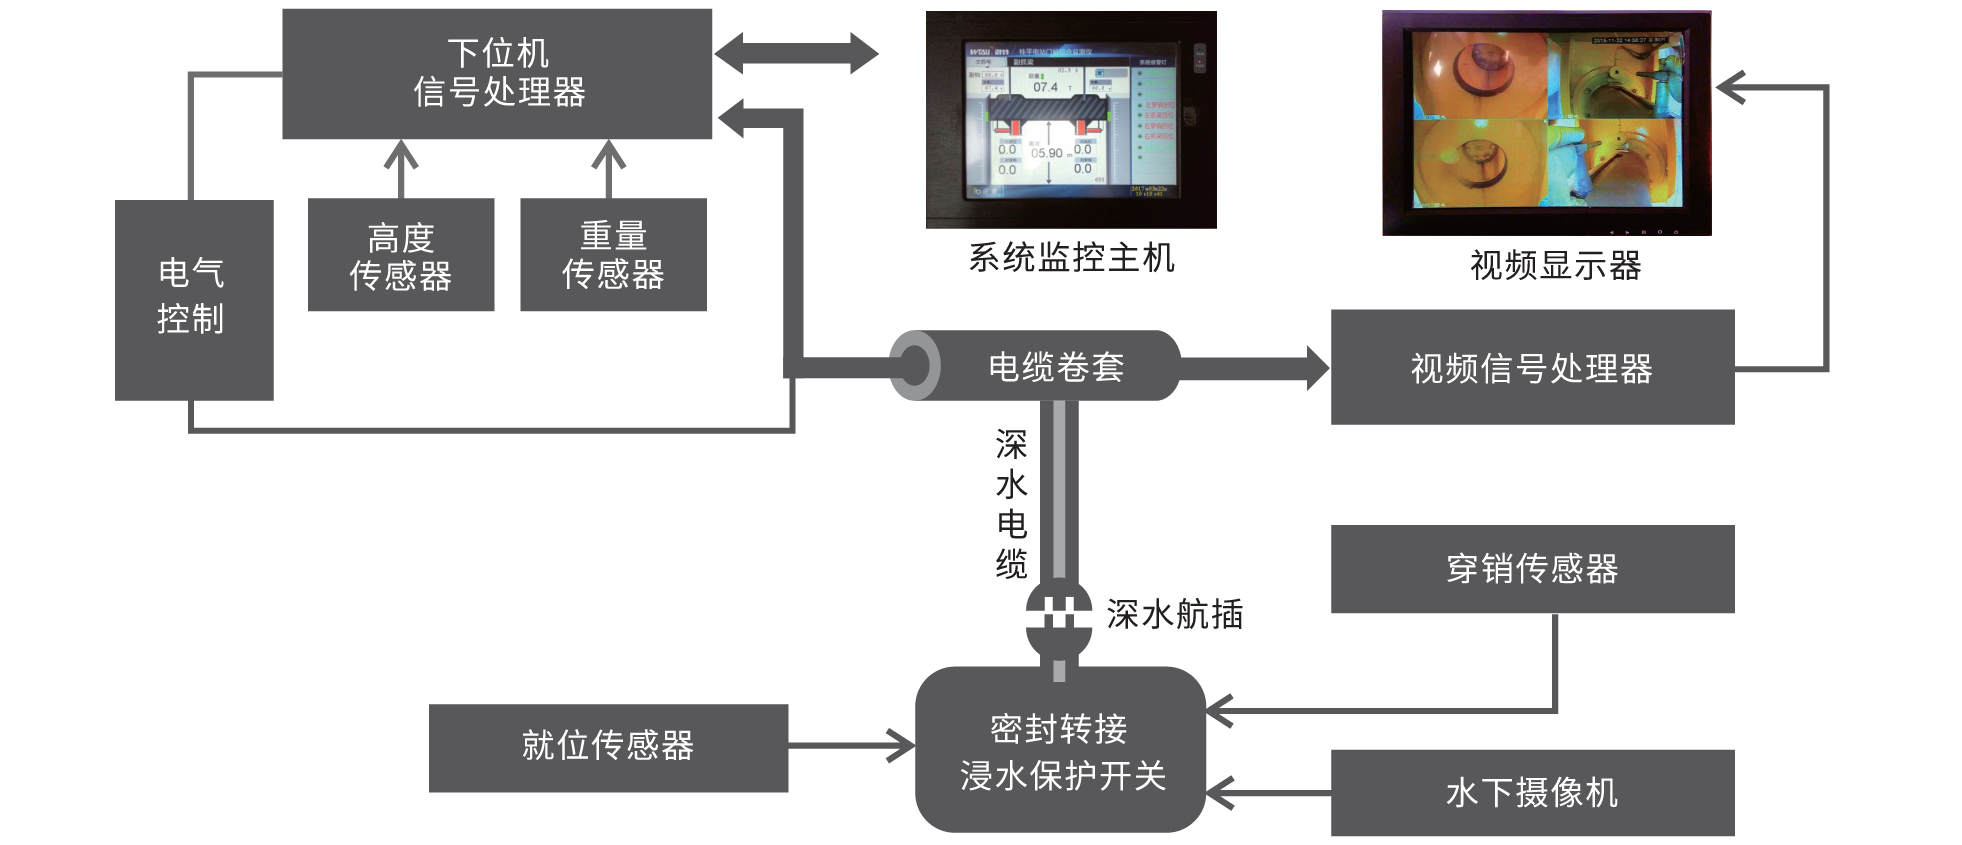 Visual integrated monitoring system for hydraulic grabbing beam